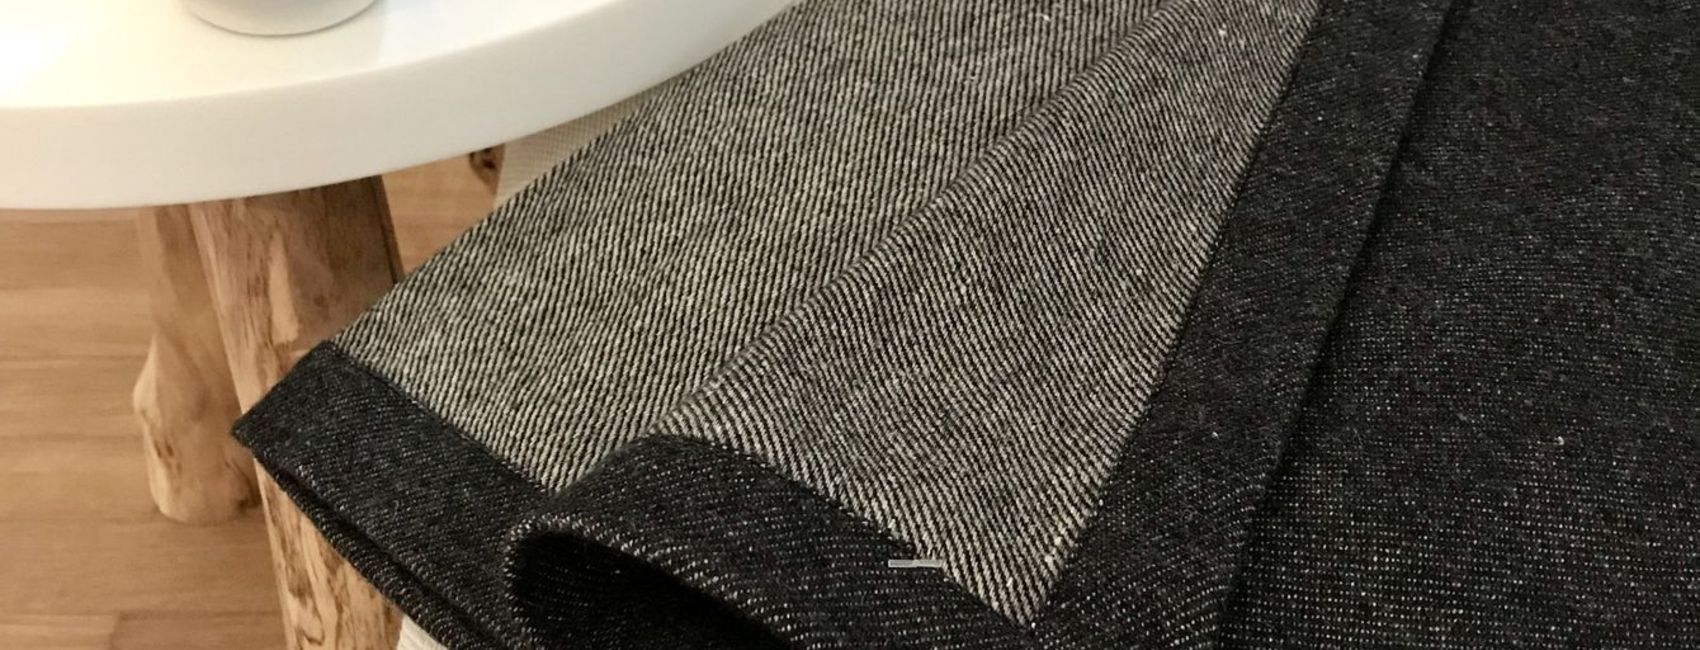 Tagesdecke gewebt aus Leinen & Wolle - Diagonal Köper